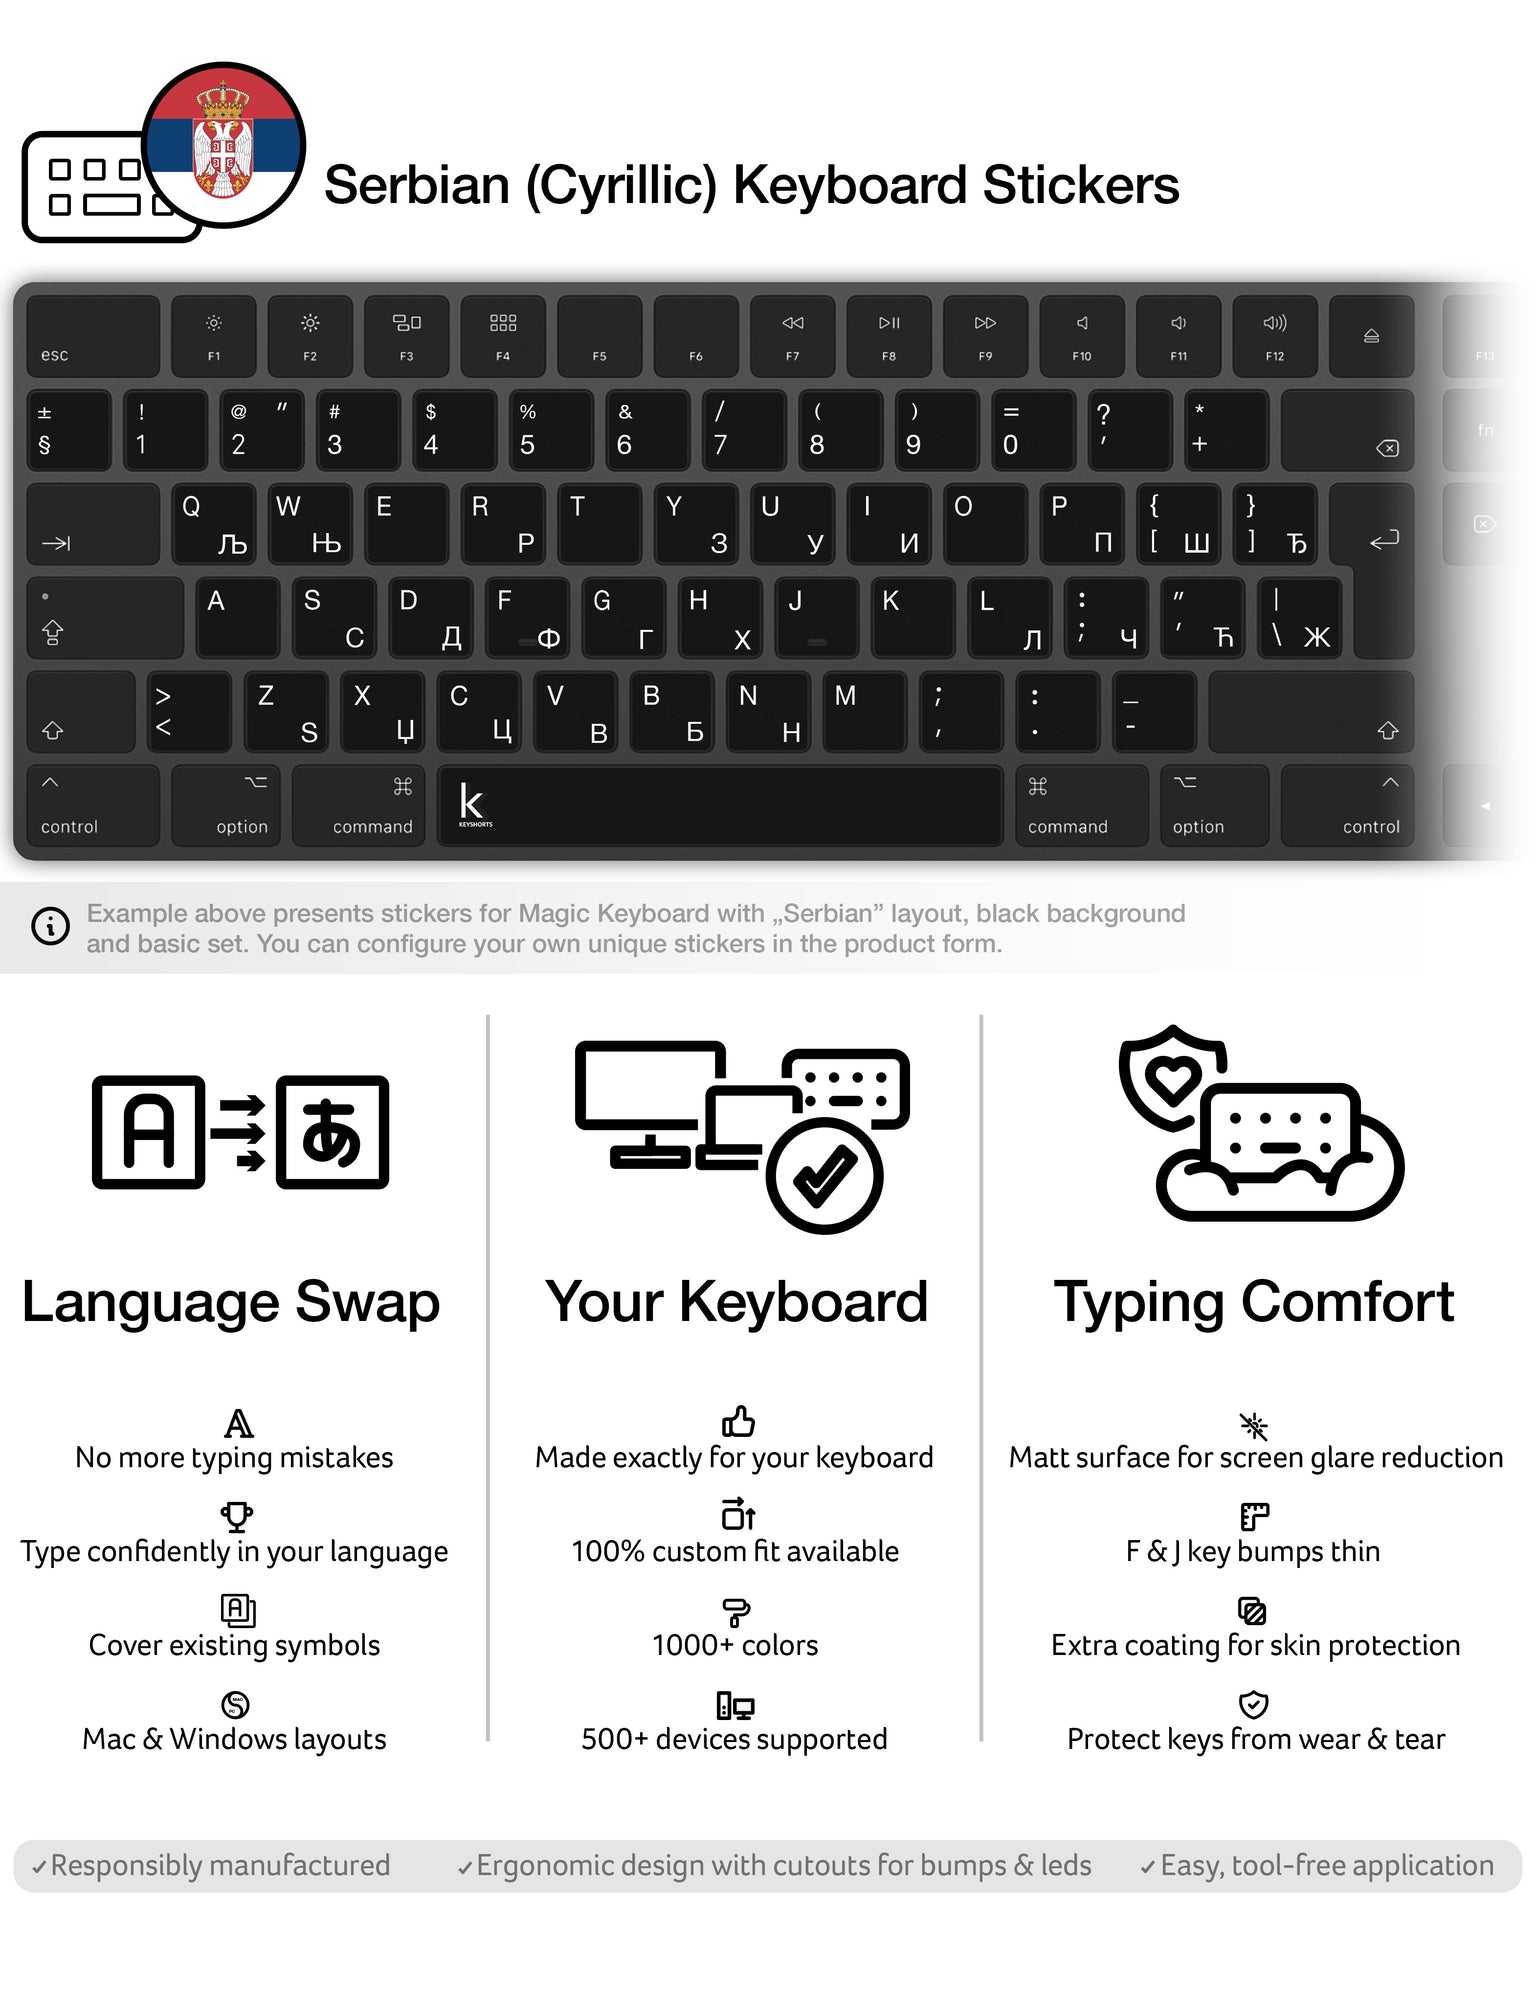 Serbian (Cyrillic) Keyboard Stickers